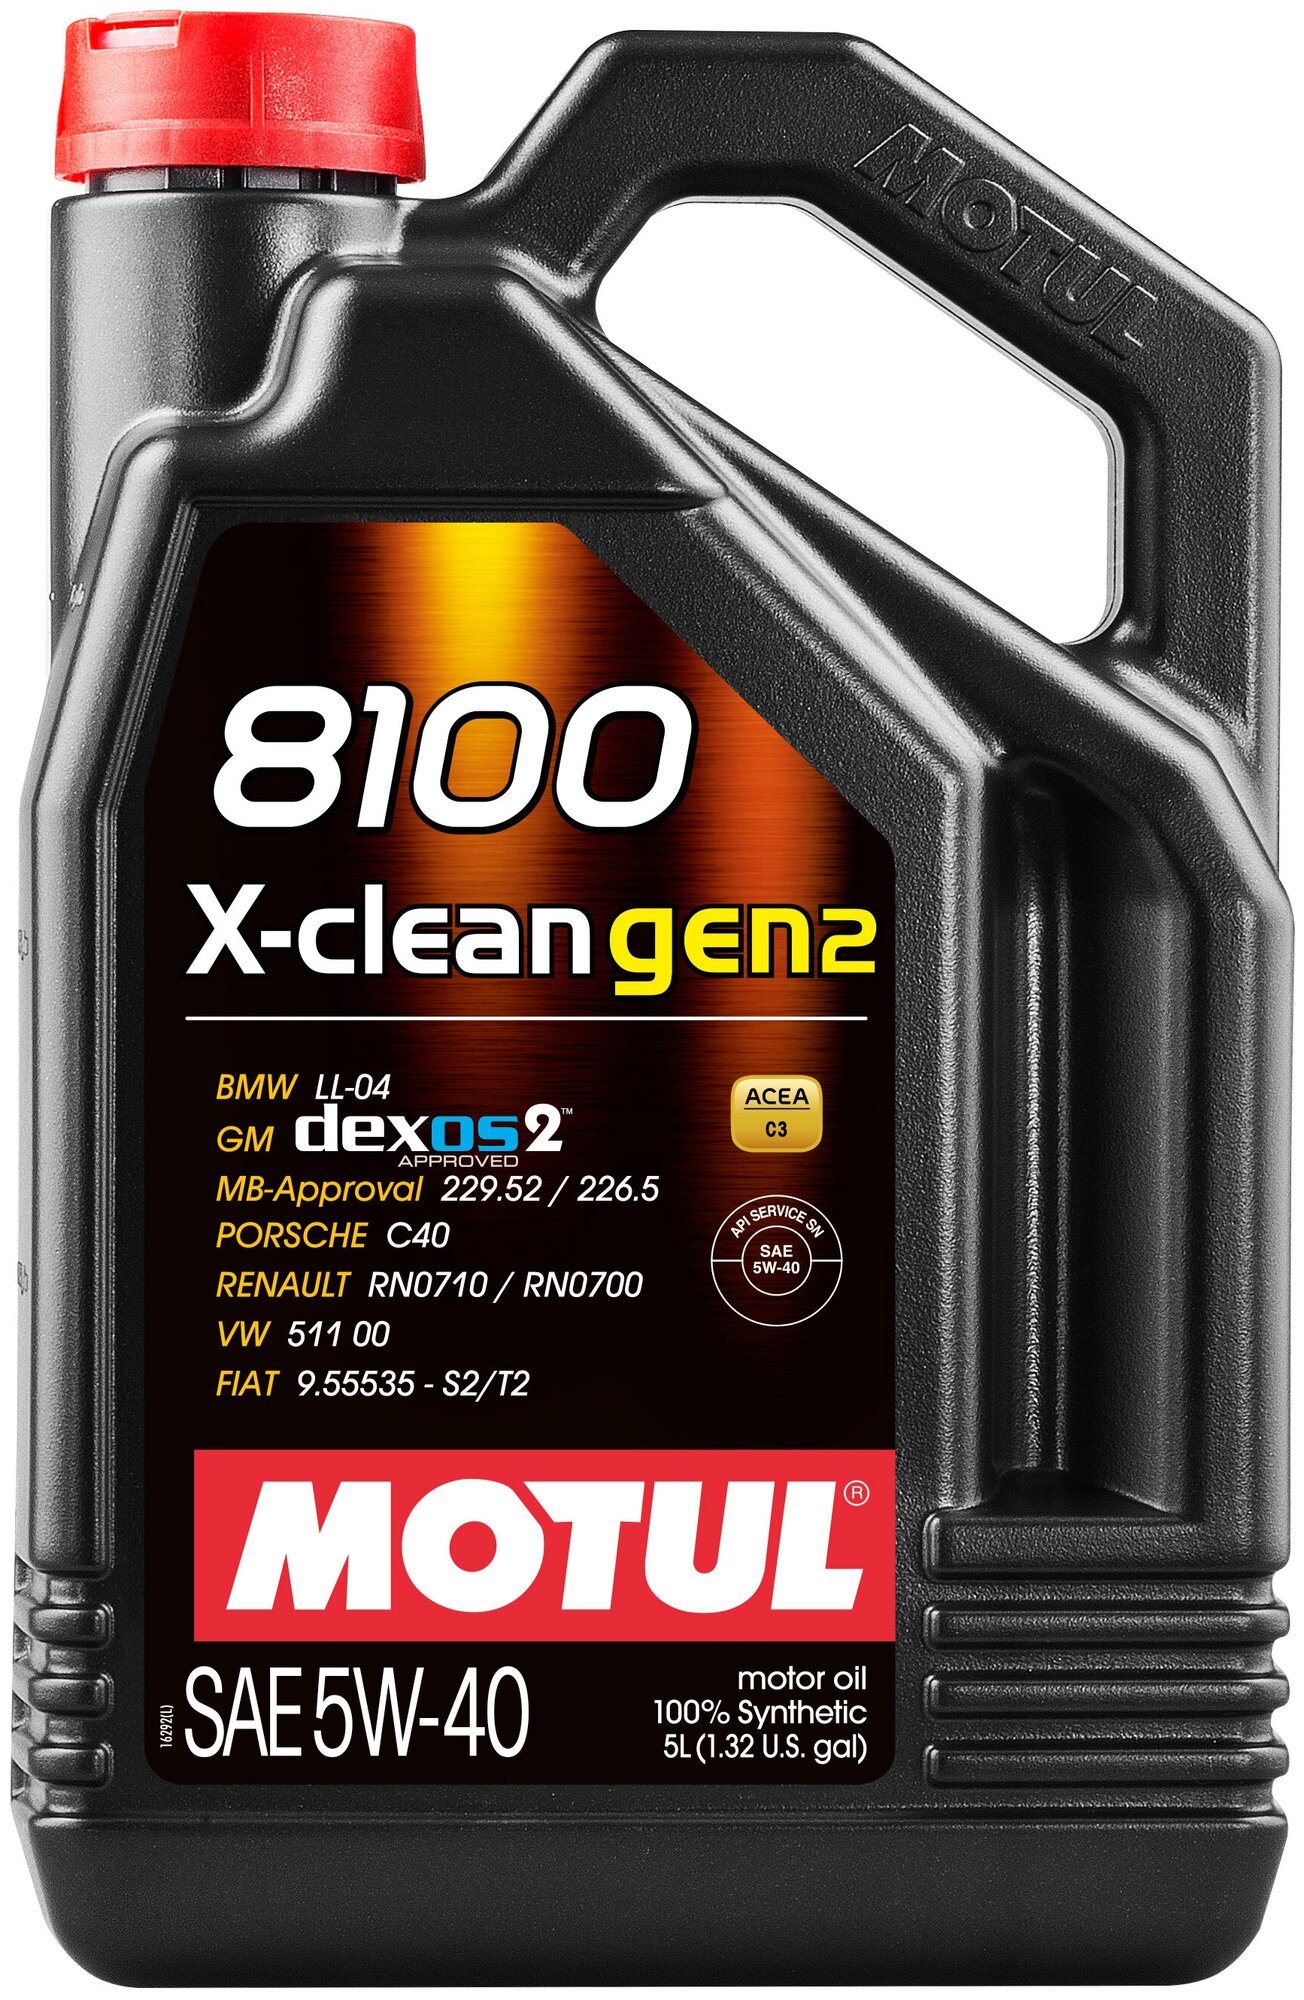 Синтетическое моторное масло Motul 8100 X-clean GEN2 5W-40